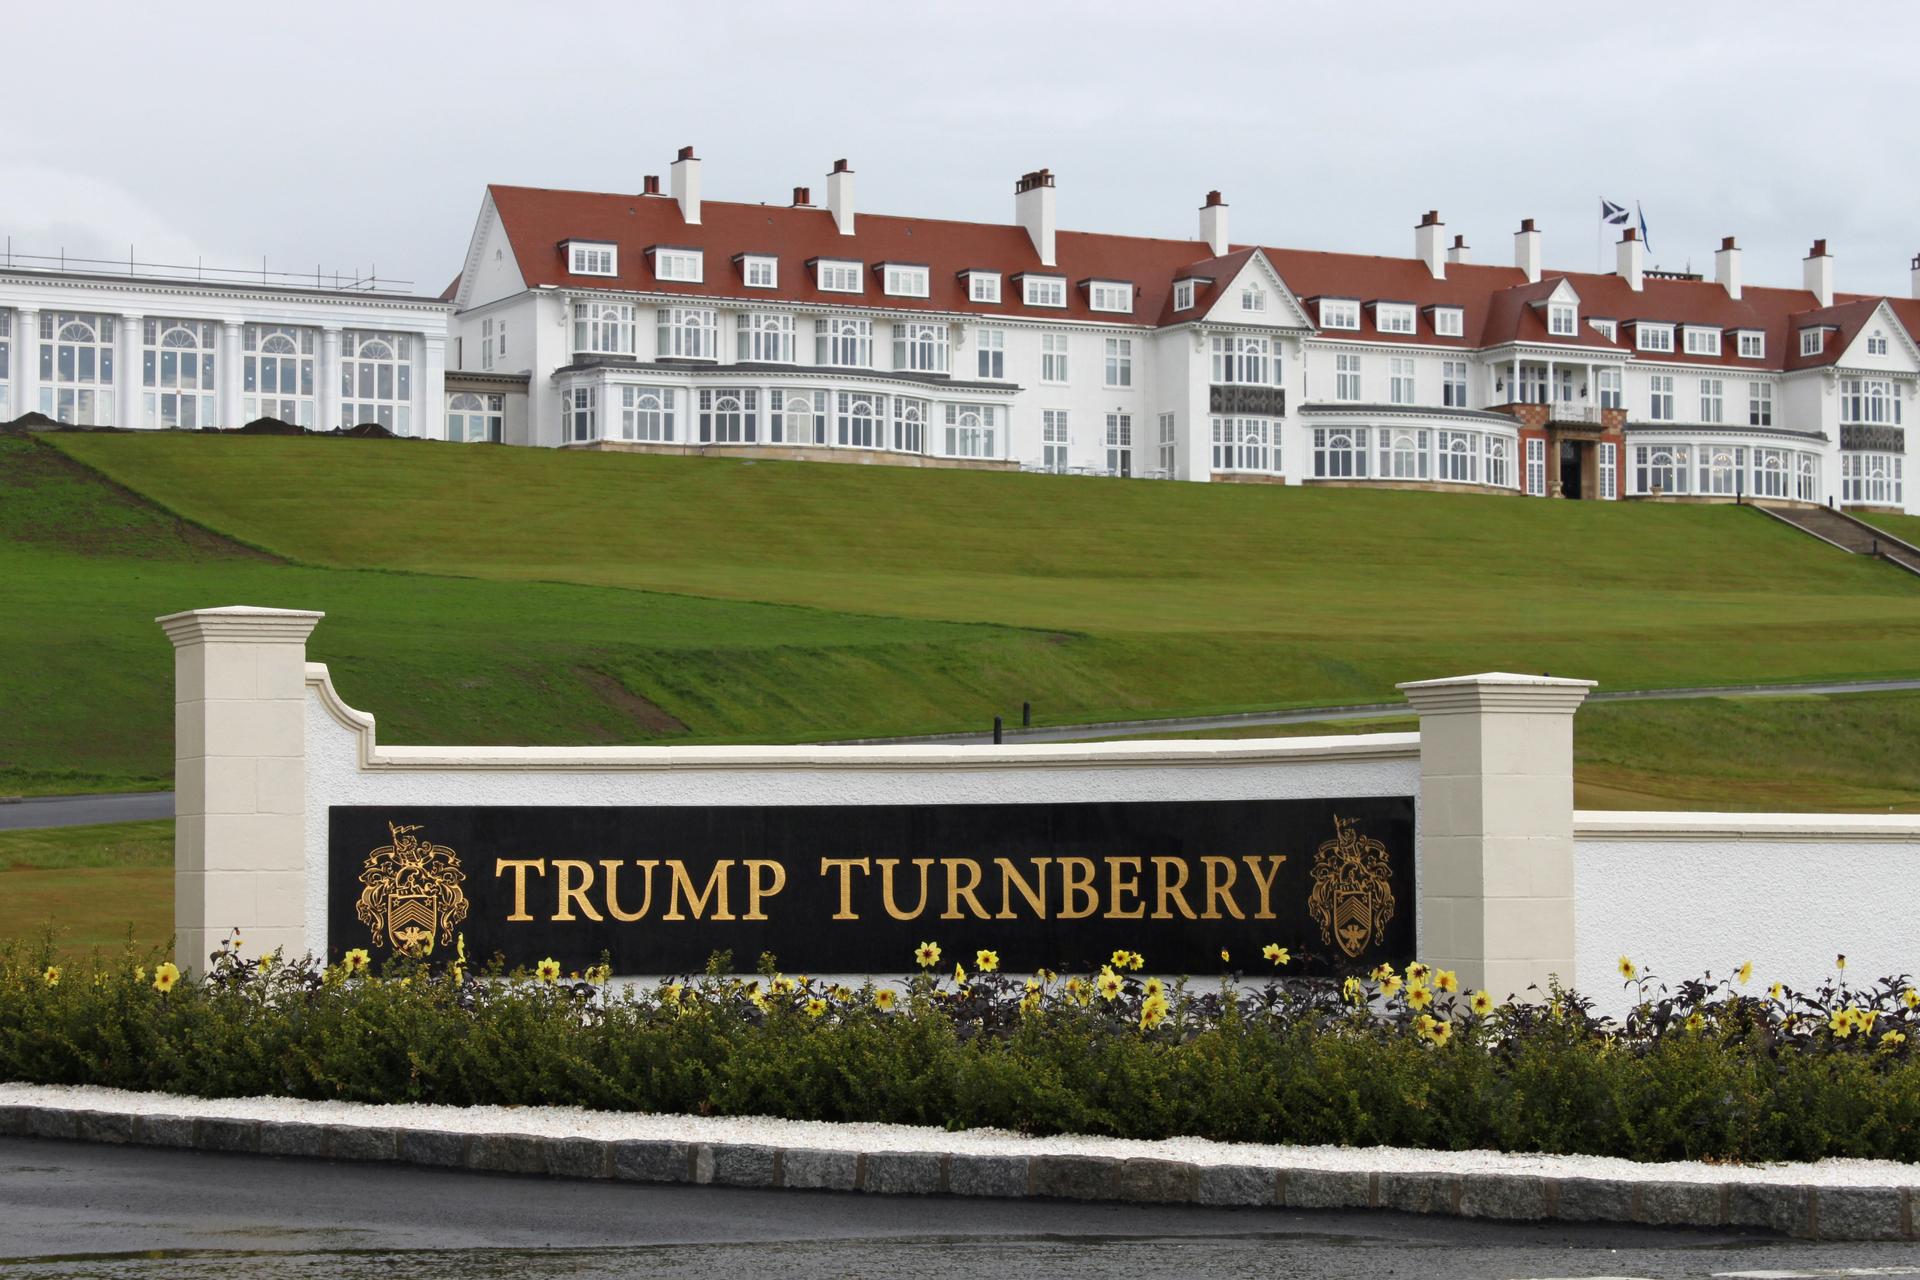 The Trump Turnberry golf resort in Turnberry, Scotland.